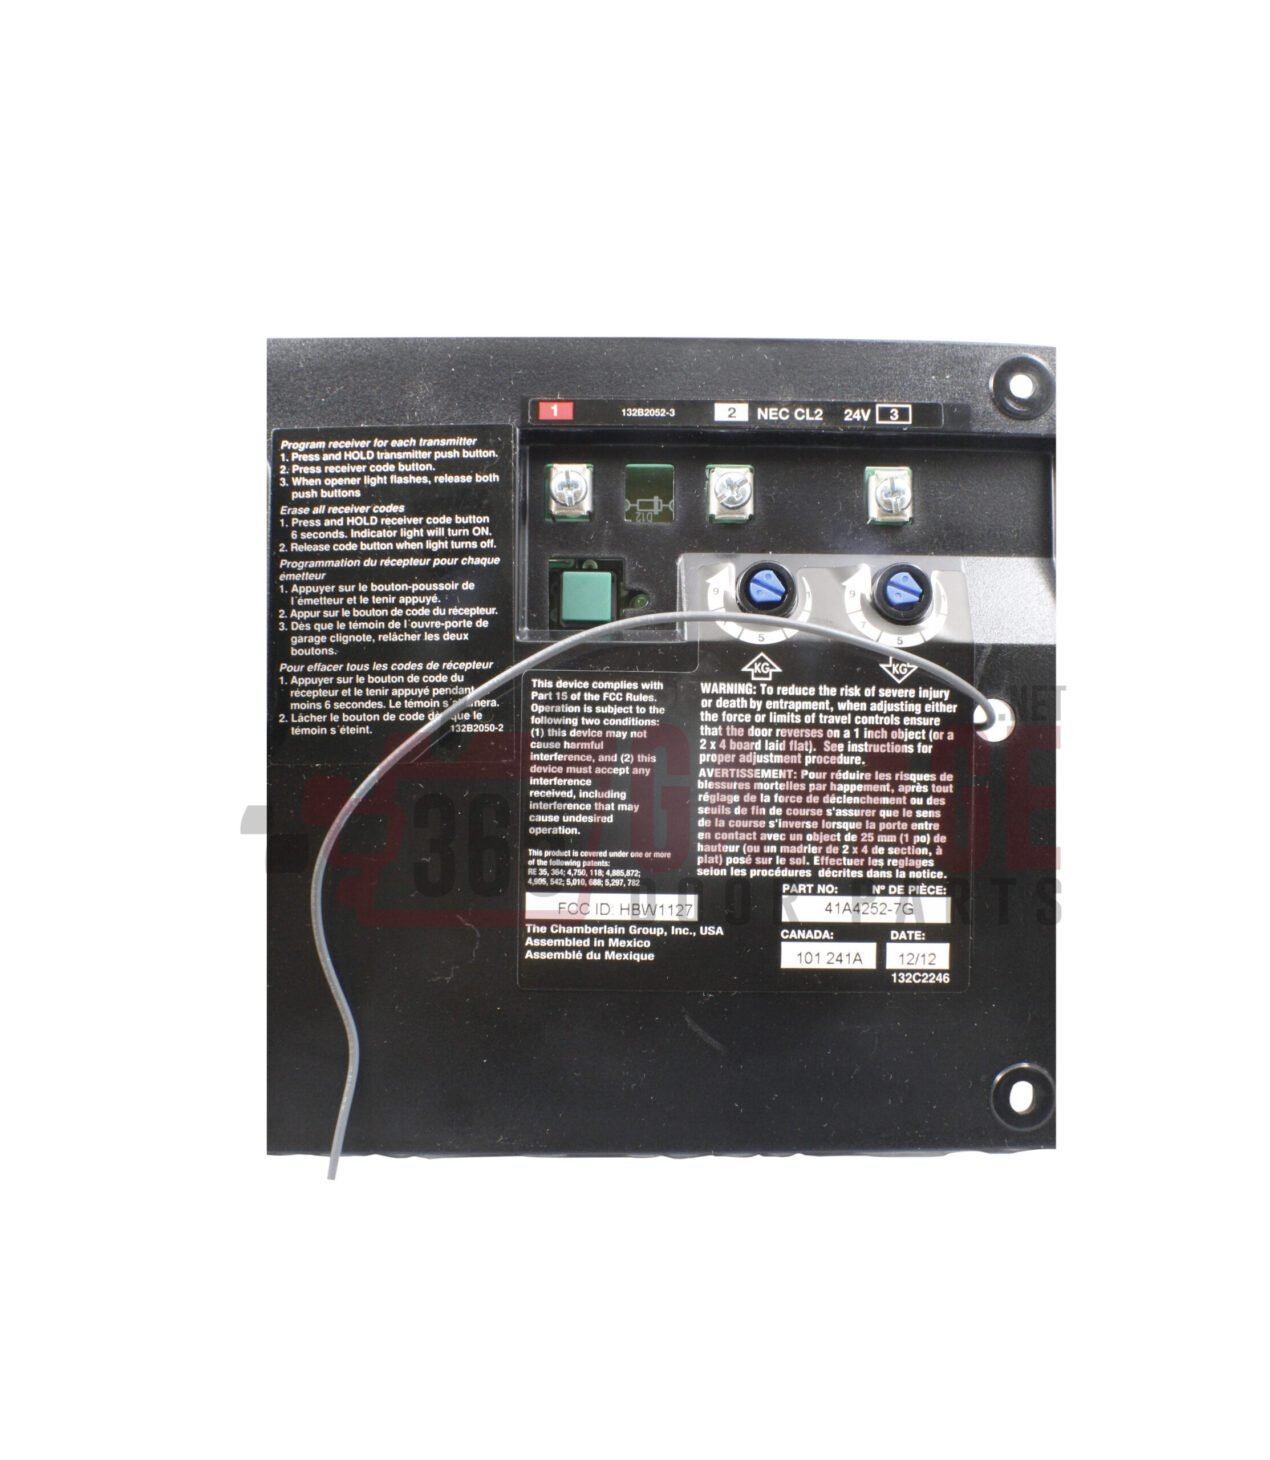 LiftMaster Receiver Logic Control Board 41A4252-7 Chamberlain